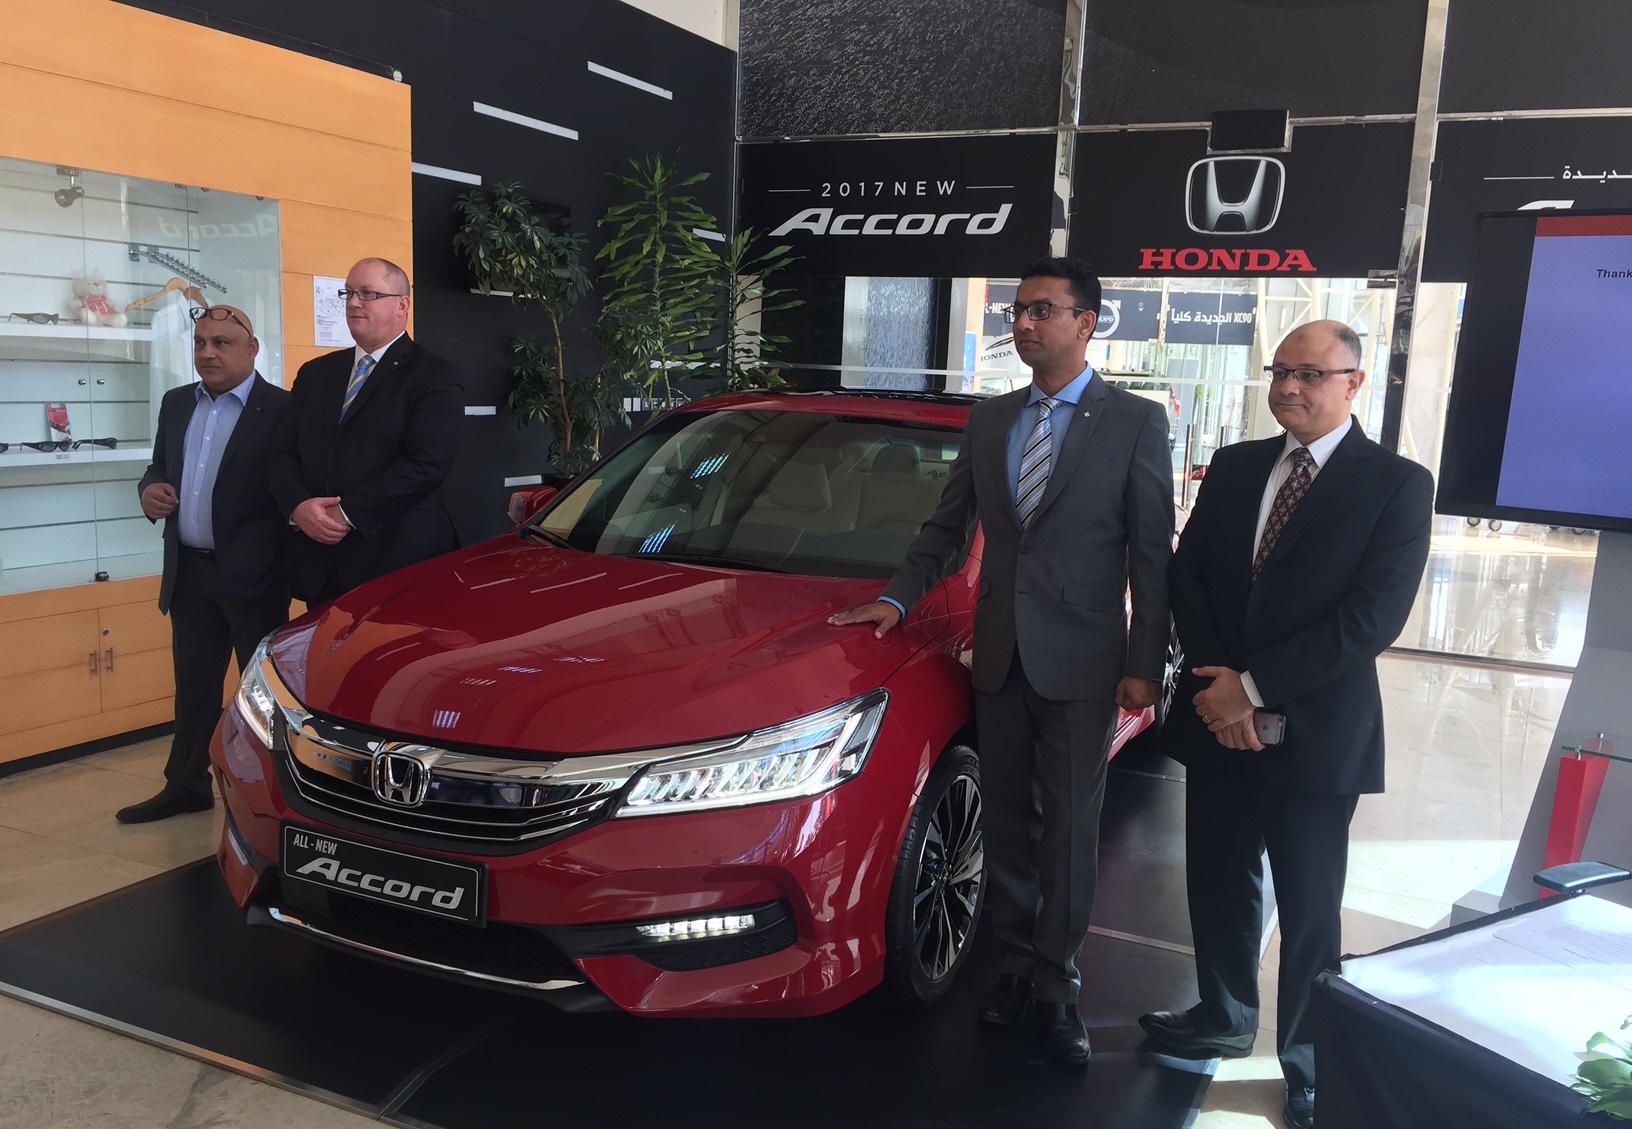 Honda Qatar Launches the All-New Honda Accord